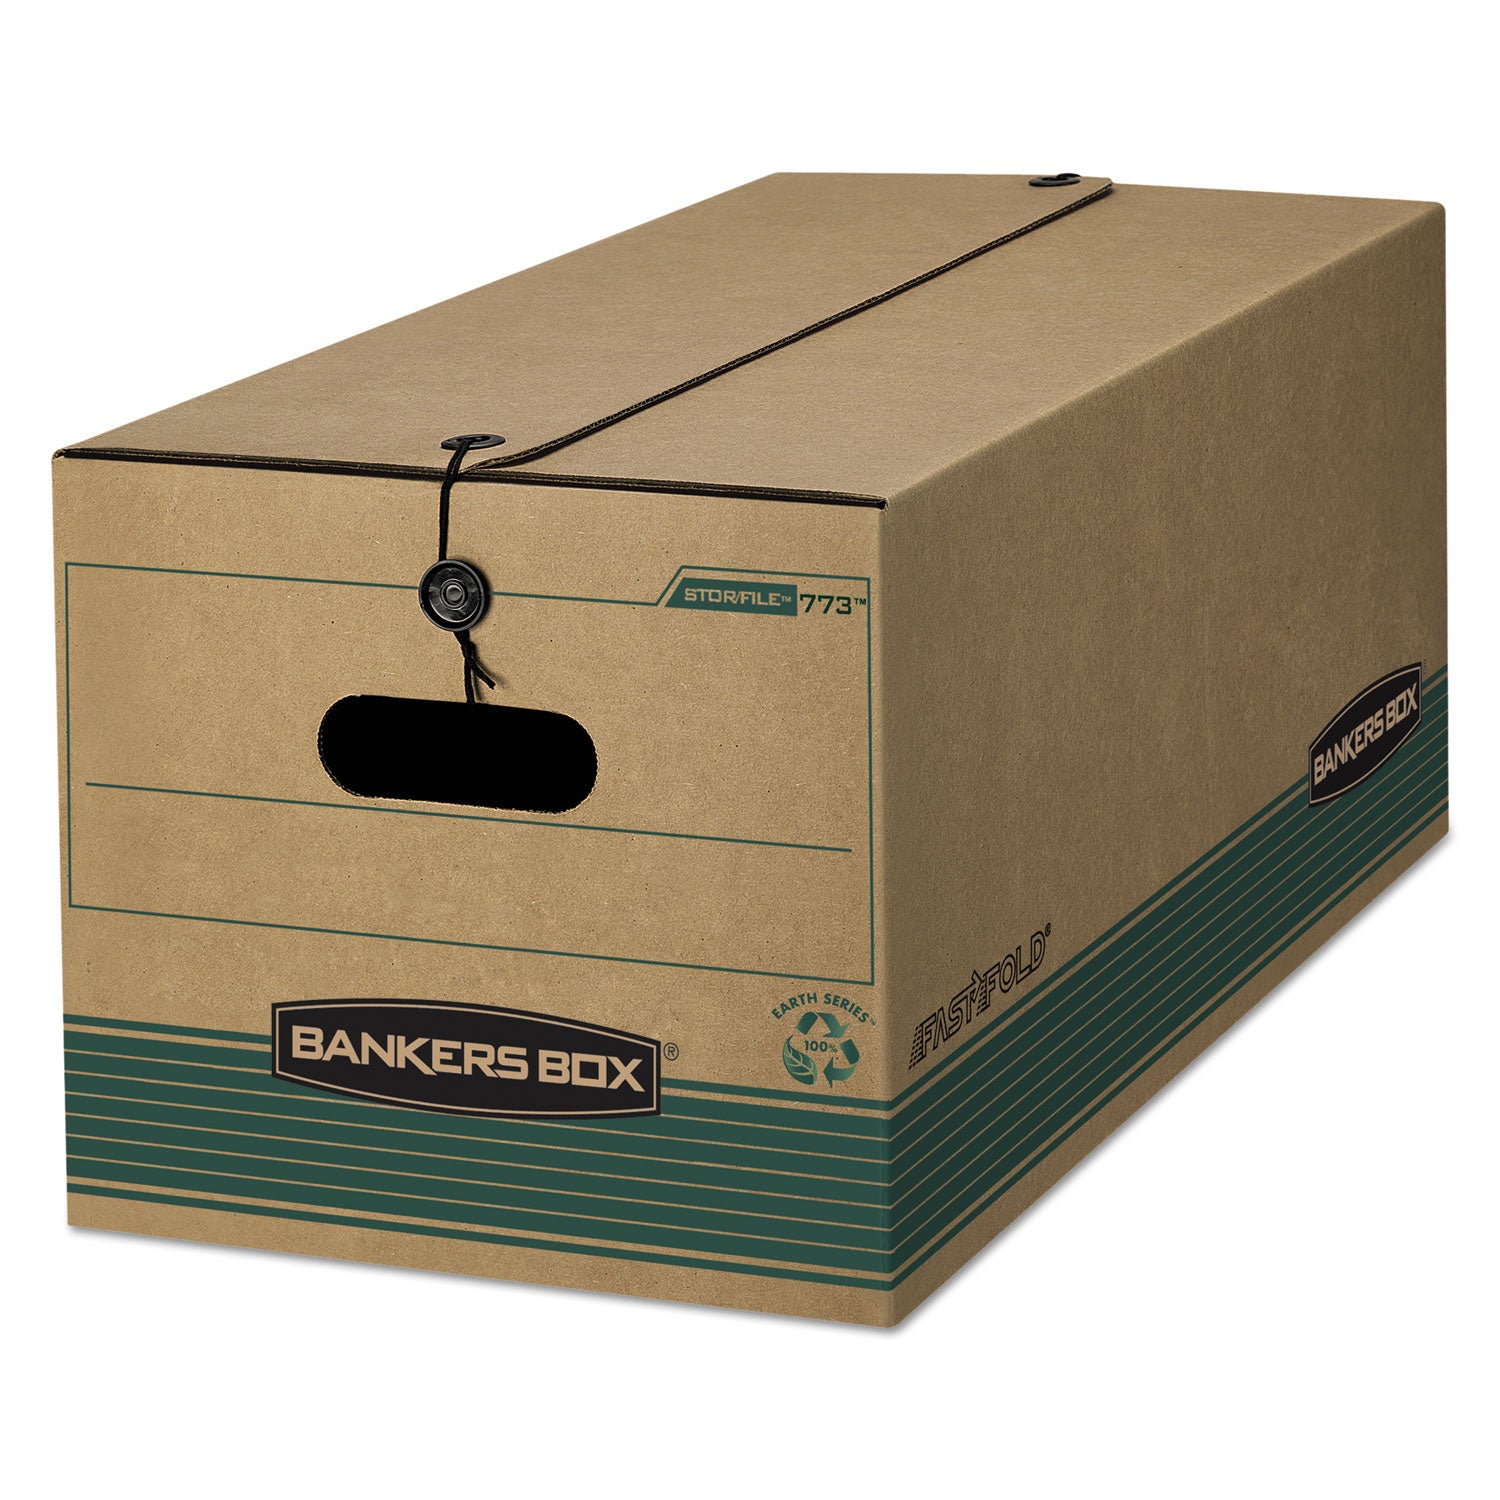 STOR/FILE Medium-Duty Strength Storage Boxes, Legal Files, 15.25" x 24.13" x 10.75", Kraft/Green, 12/Carton - 